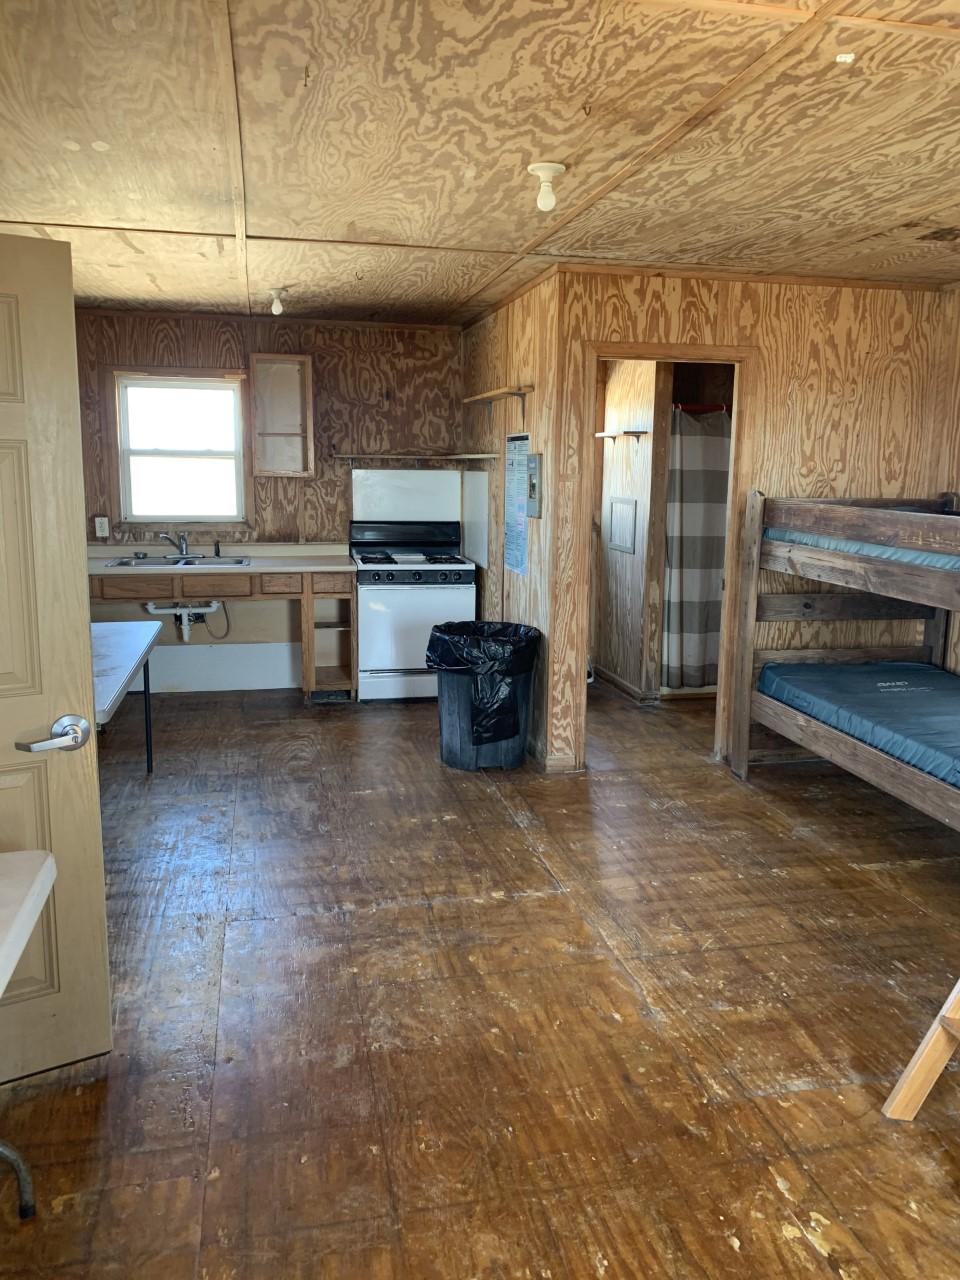 Rustic cabin interior showing bunk beds, kitchenette and doorway to restroom